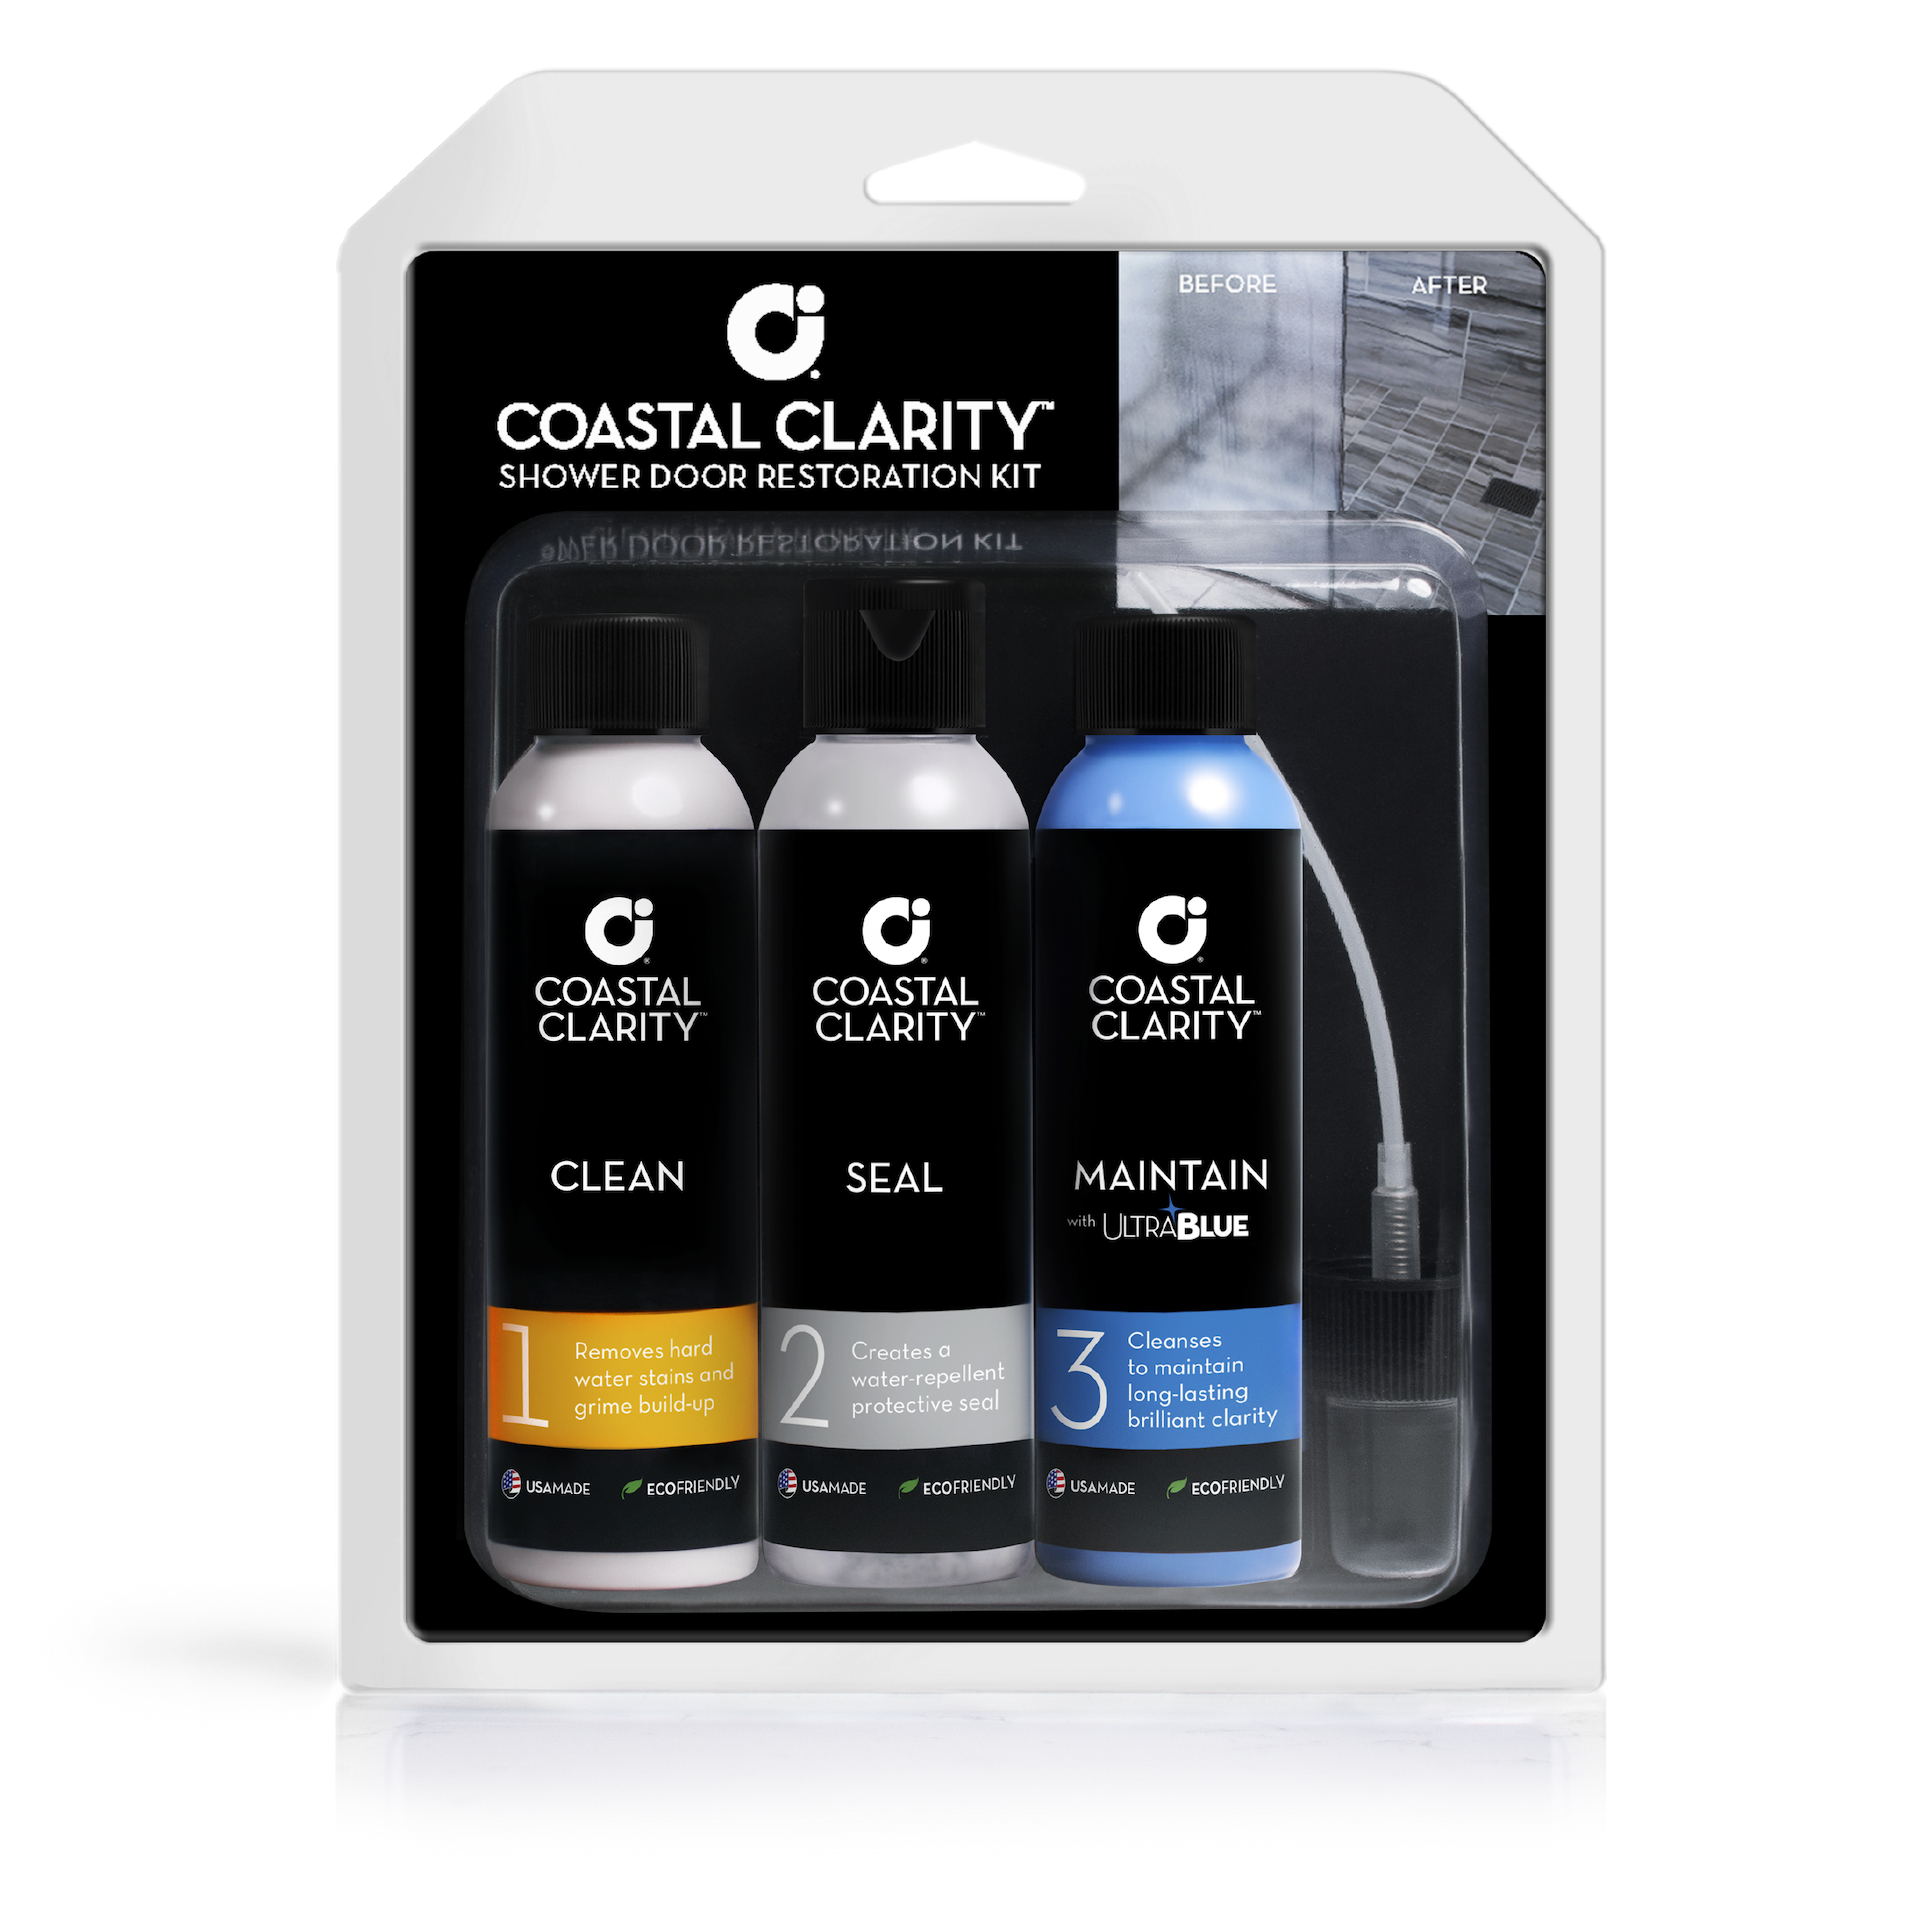 Coastal Clarity Shower Door Restoration Kit 3 bottles in package